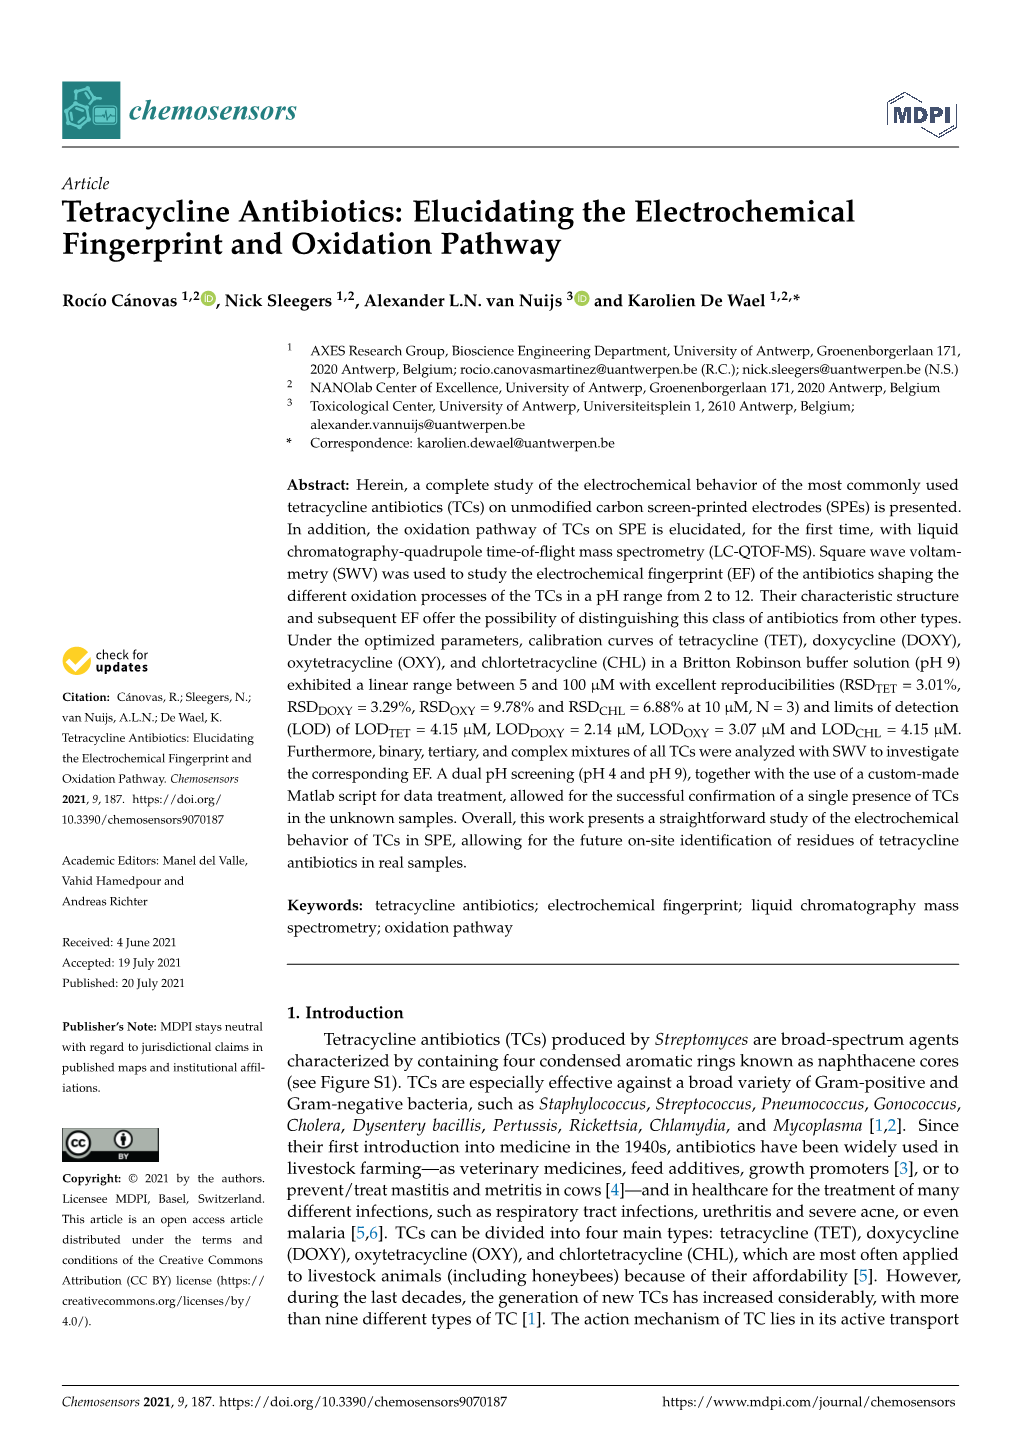 Tetracycline Antibiotics: Elucidating the Electrochemical Fingerprint and Oxidation Pathway